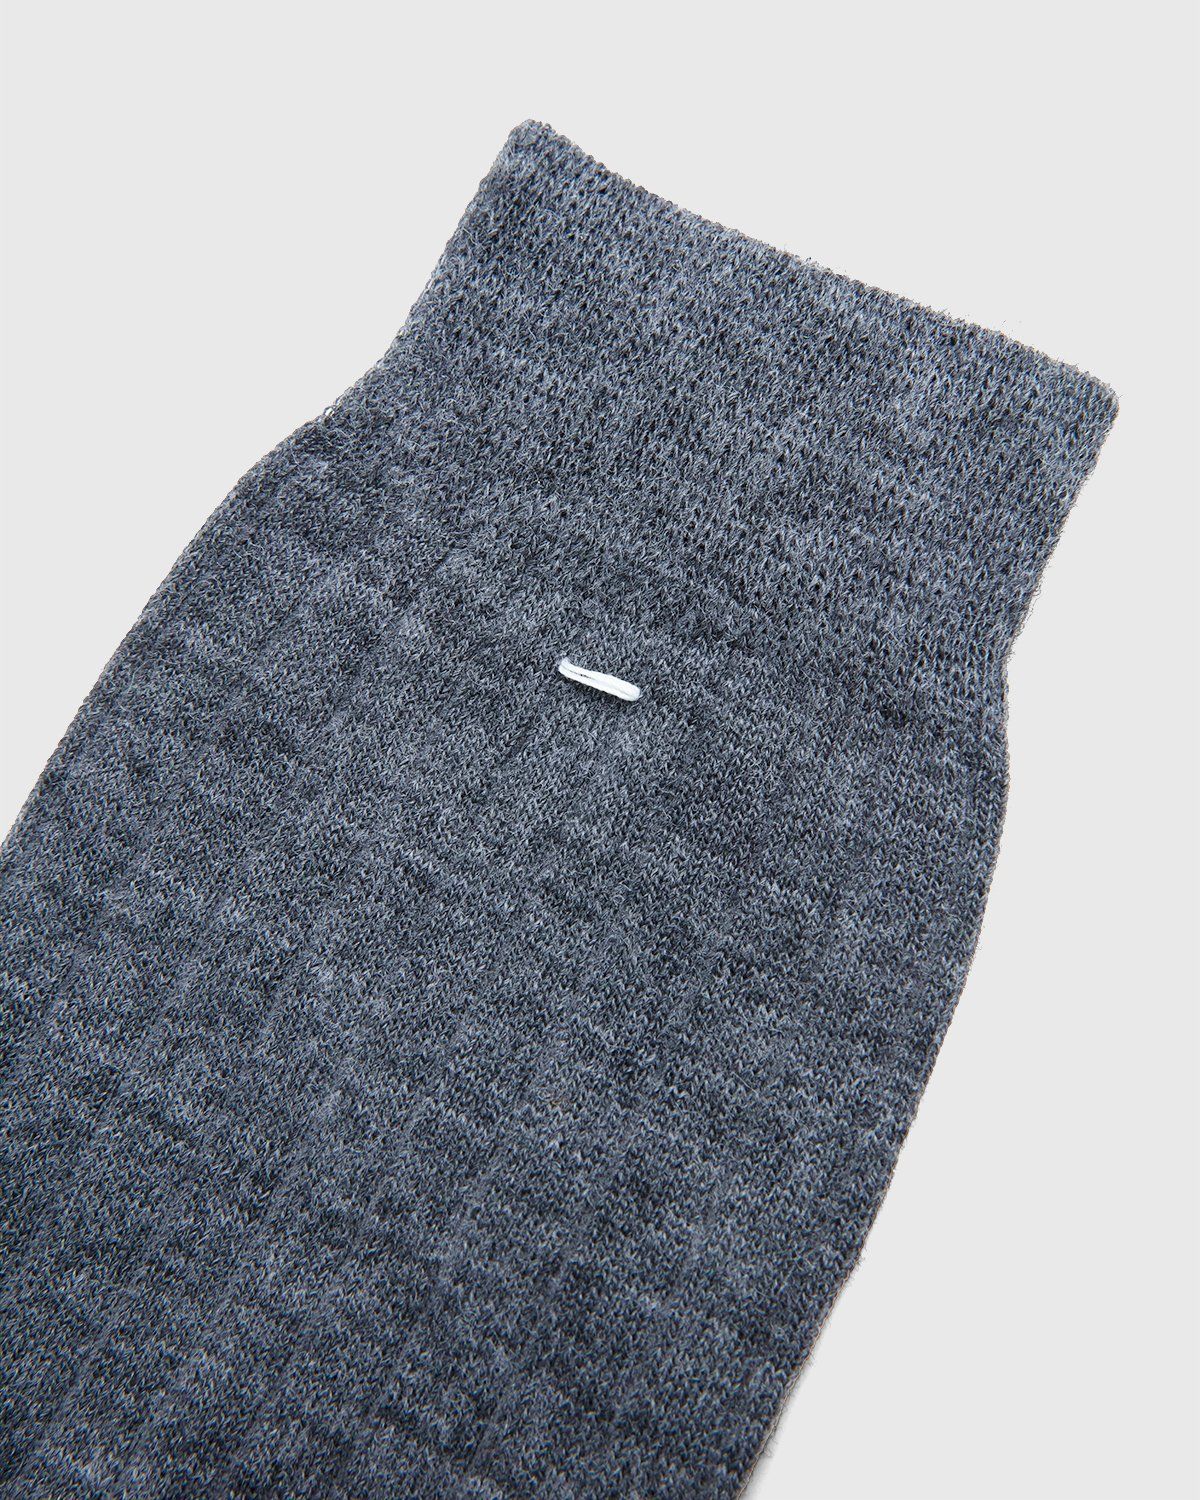 Maison Margiela – Tabi Socks Grey - Socks - Grey - Image 4